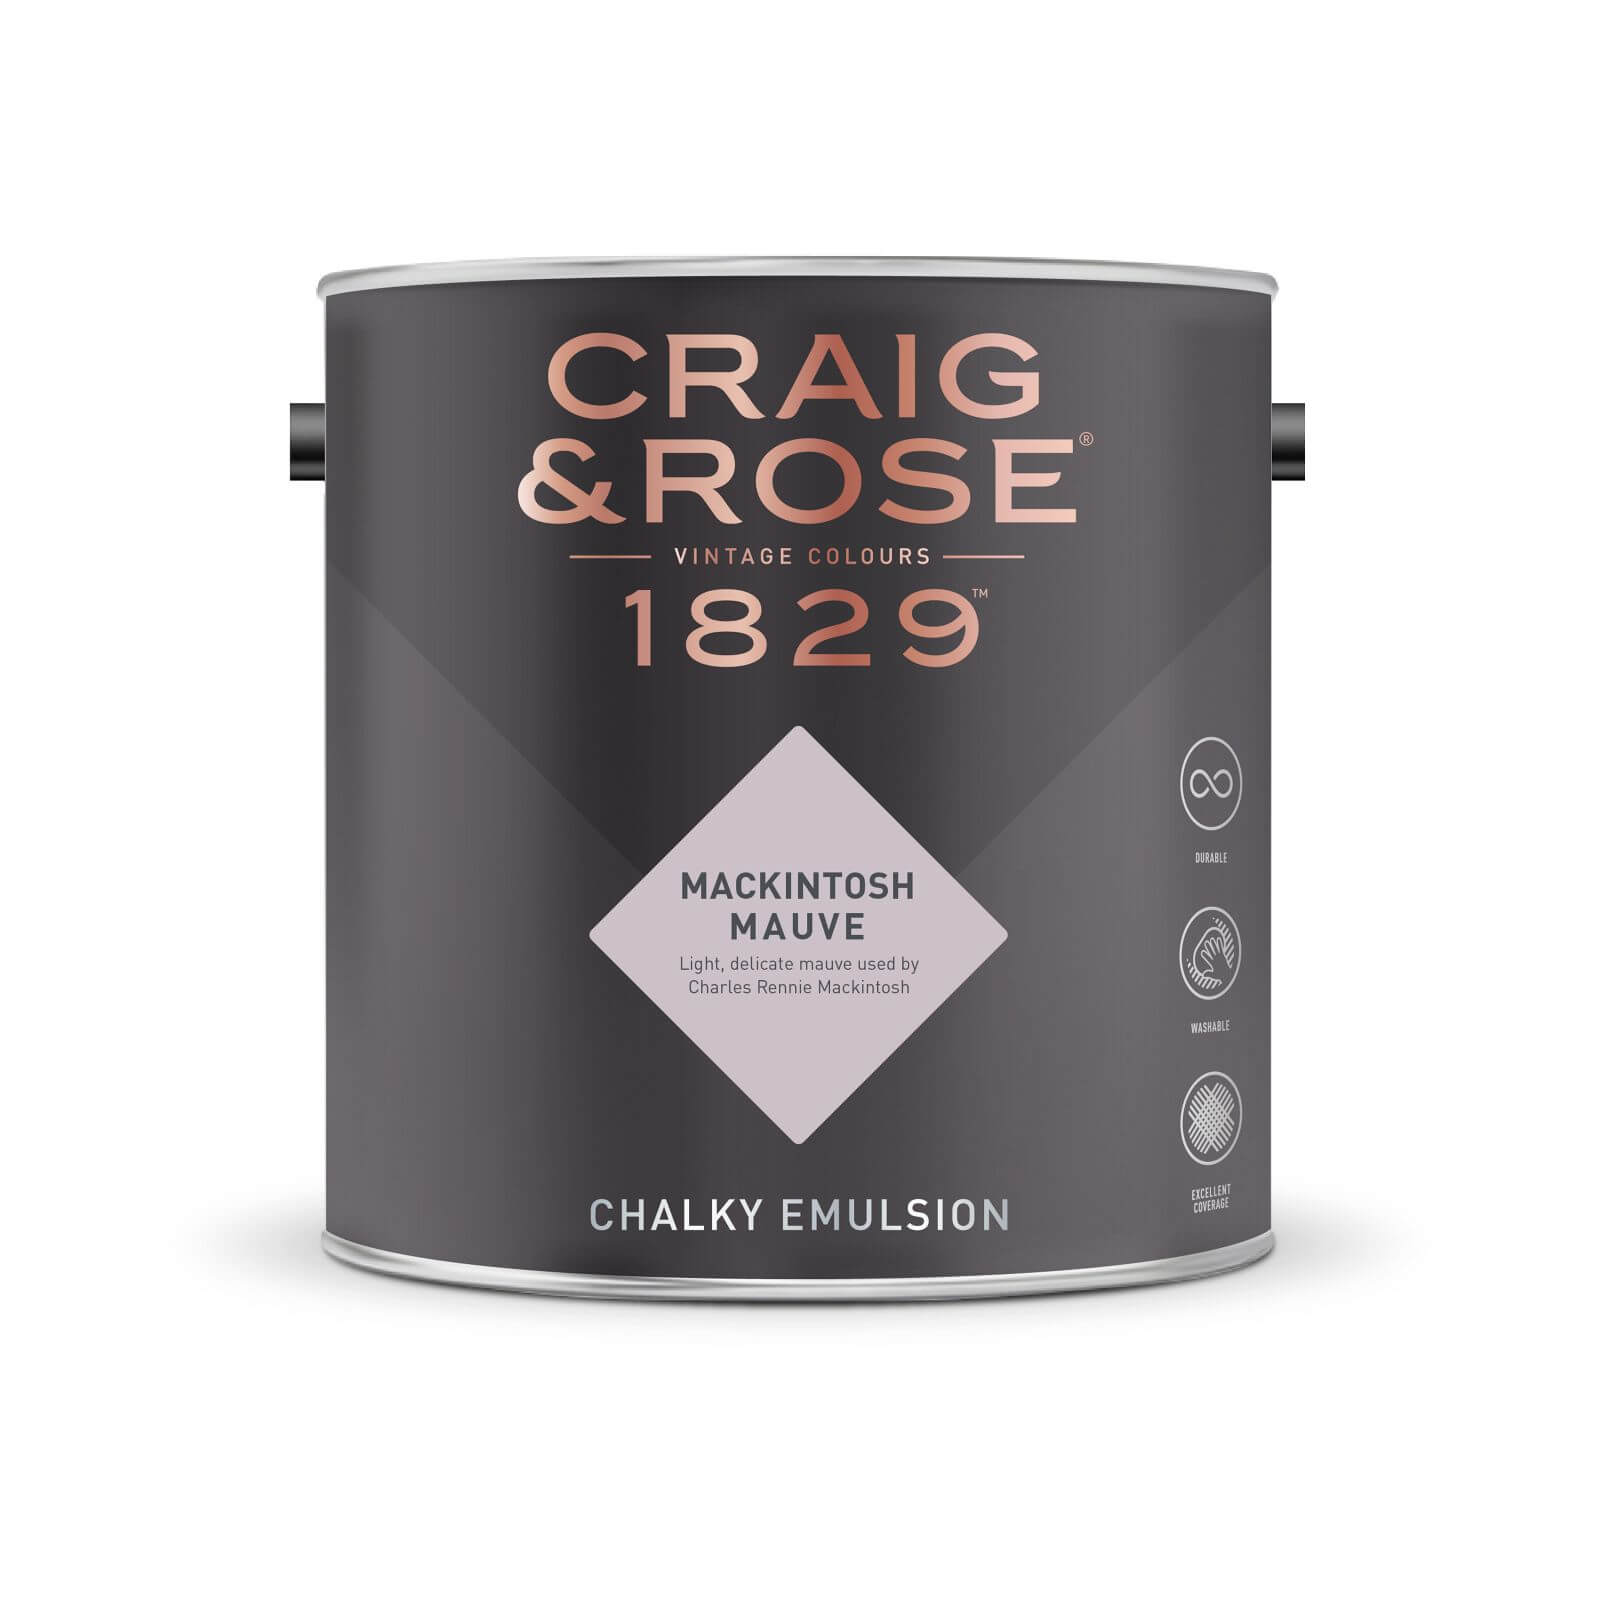 Craig & Rose 1829 Chalky Emulsion Paint Mackintosh Mauve - Tester 50ml